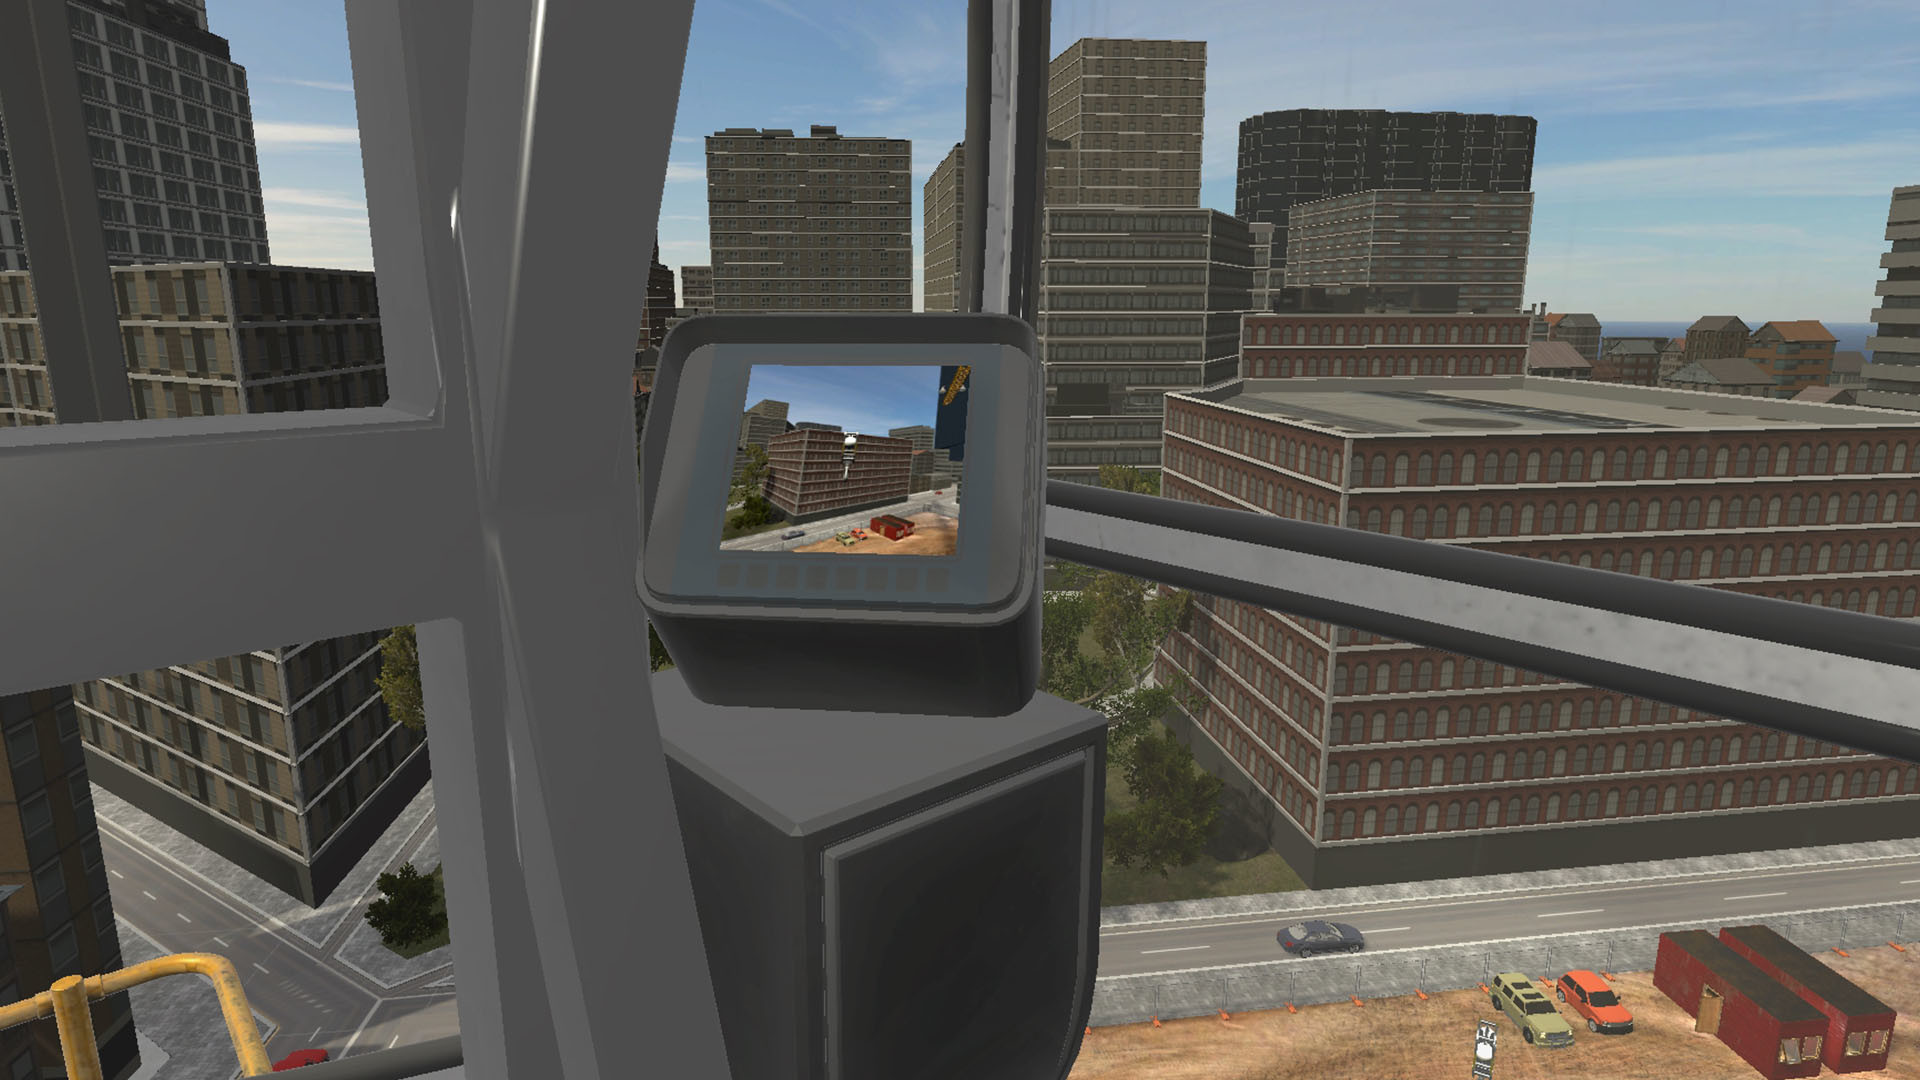 VE GSIM Tower Crane Simulator